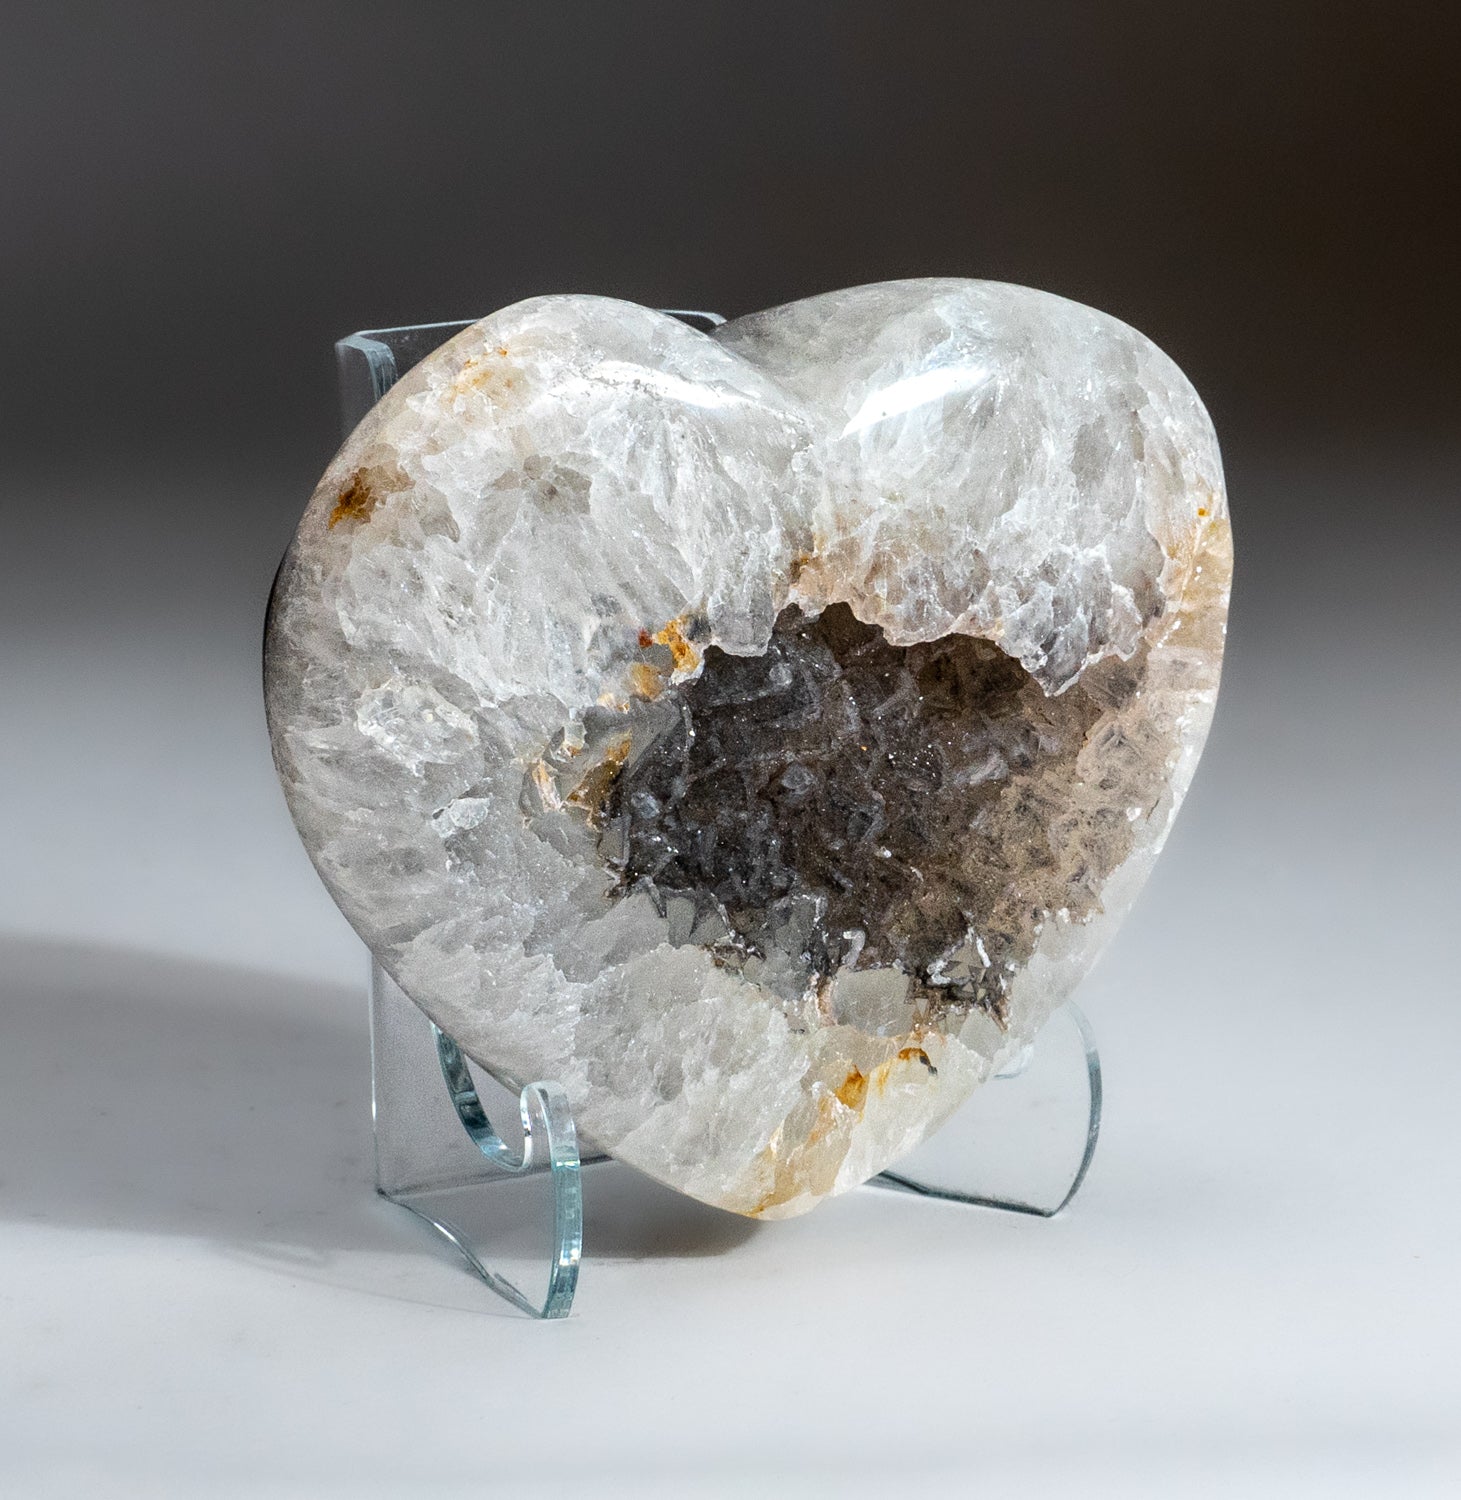 Genuine Banded Agate Quartz Geode Heart from Uruguay (337.9 grams)